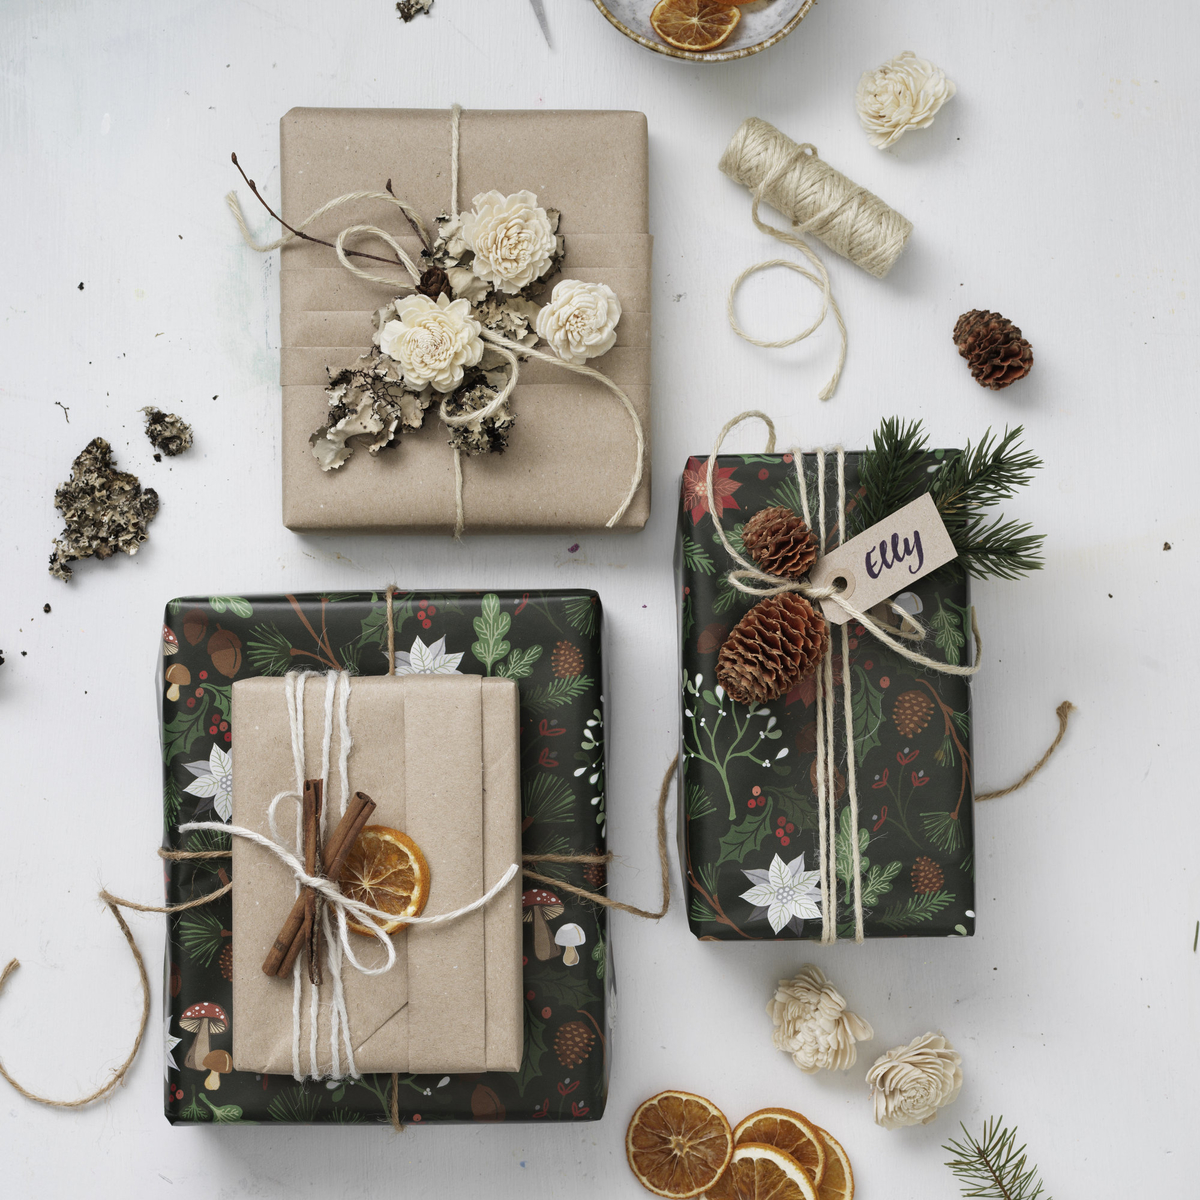 Make nature-inspired Christmas gifts